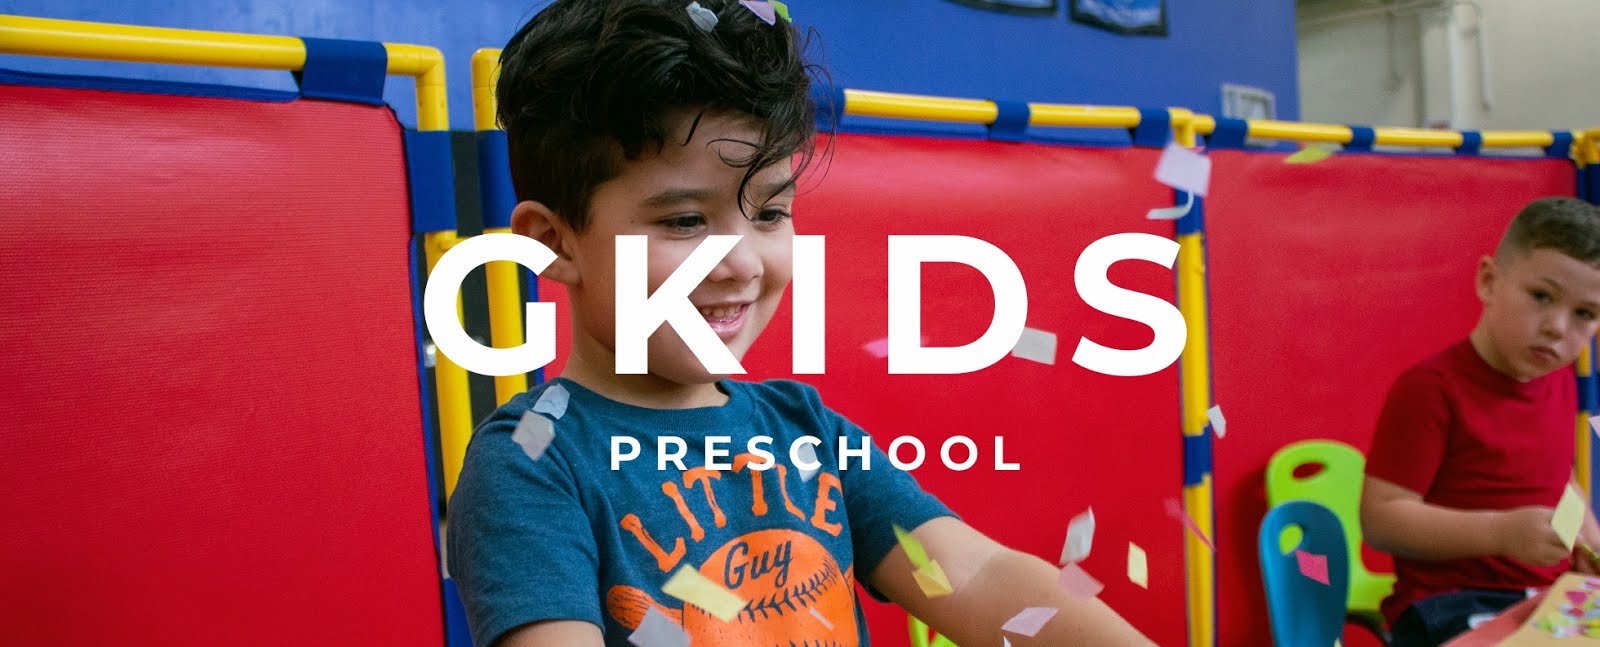 GKids Preschool